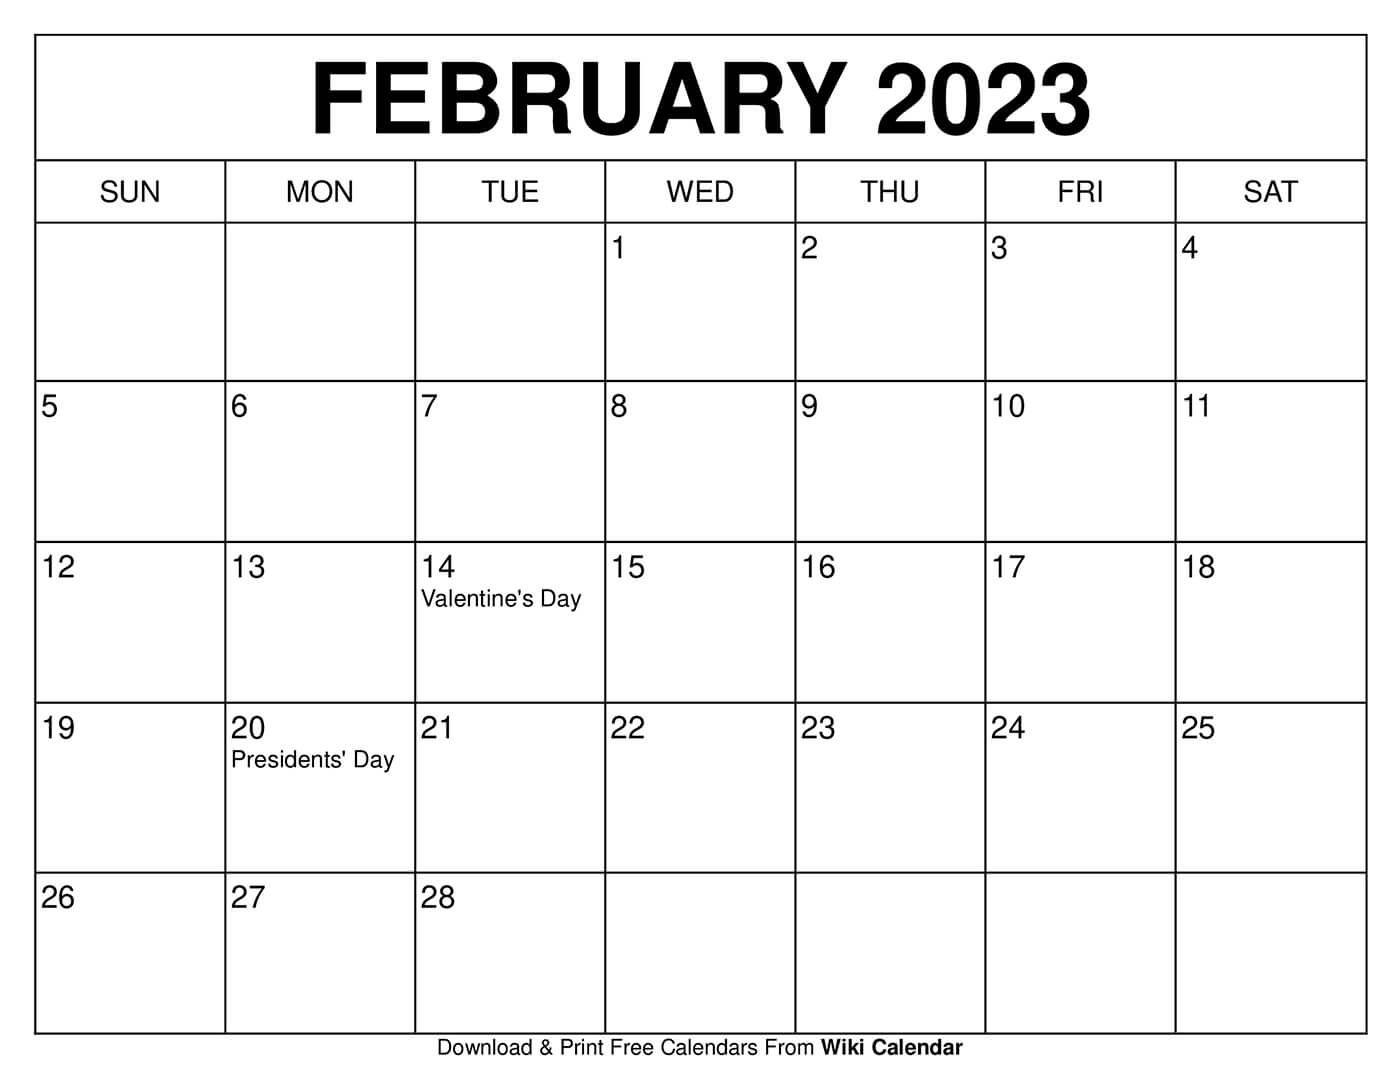 feb-2023-calendar-printable-get-calendar-2023-update